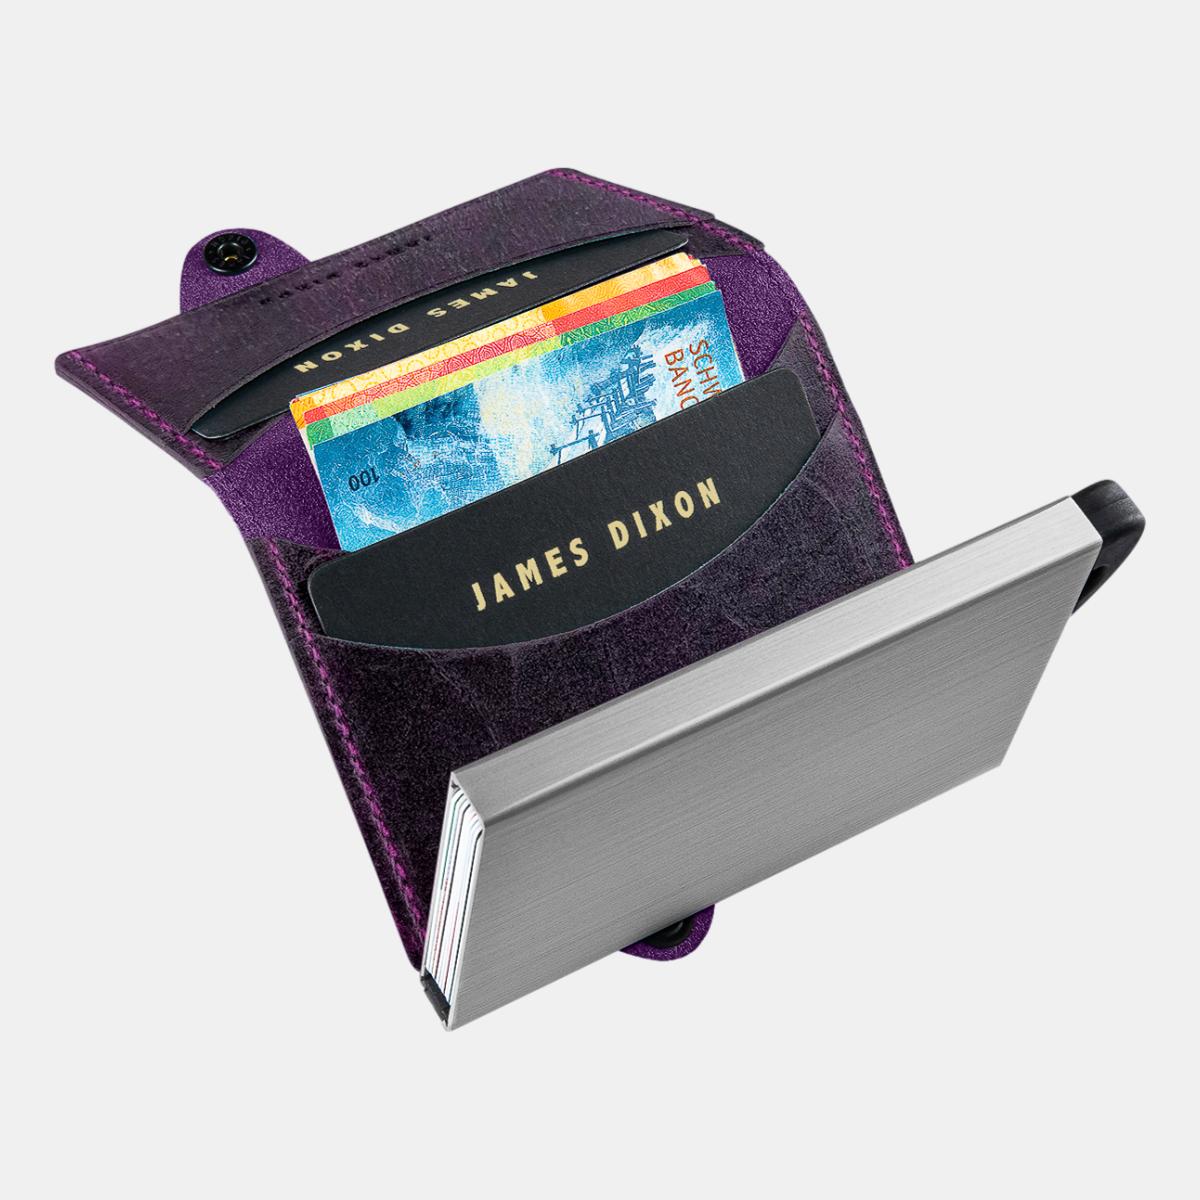 jd0293 james dixon boton raw purple wallet notes